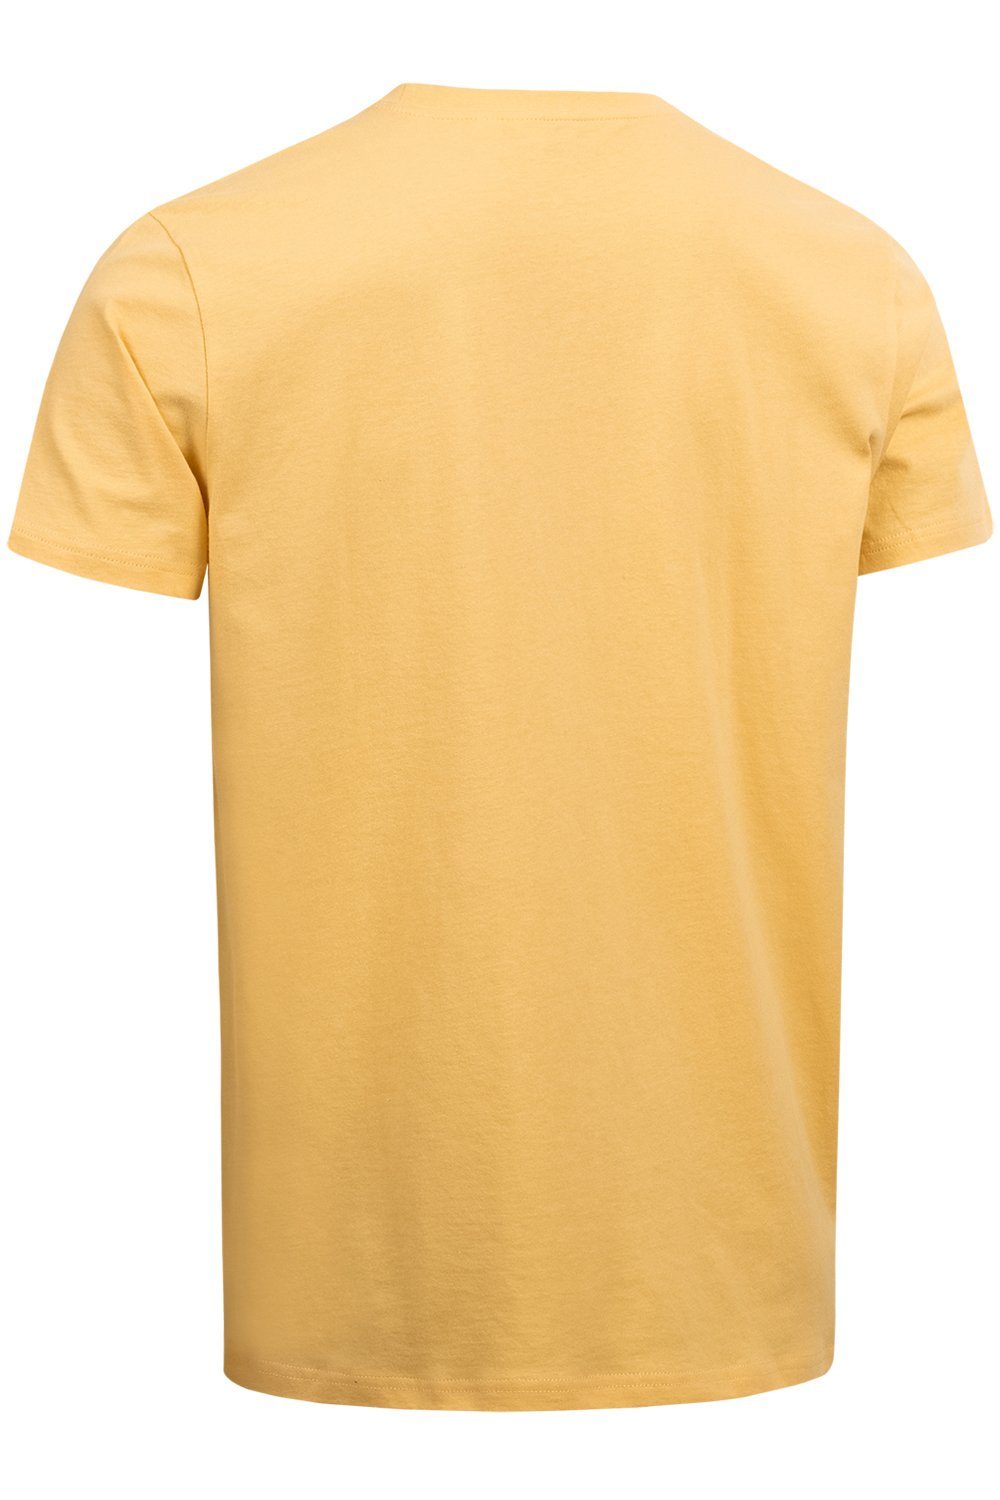 Pastel T-Shirt Lonsdale Yellow/White ENDMOOR